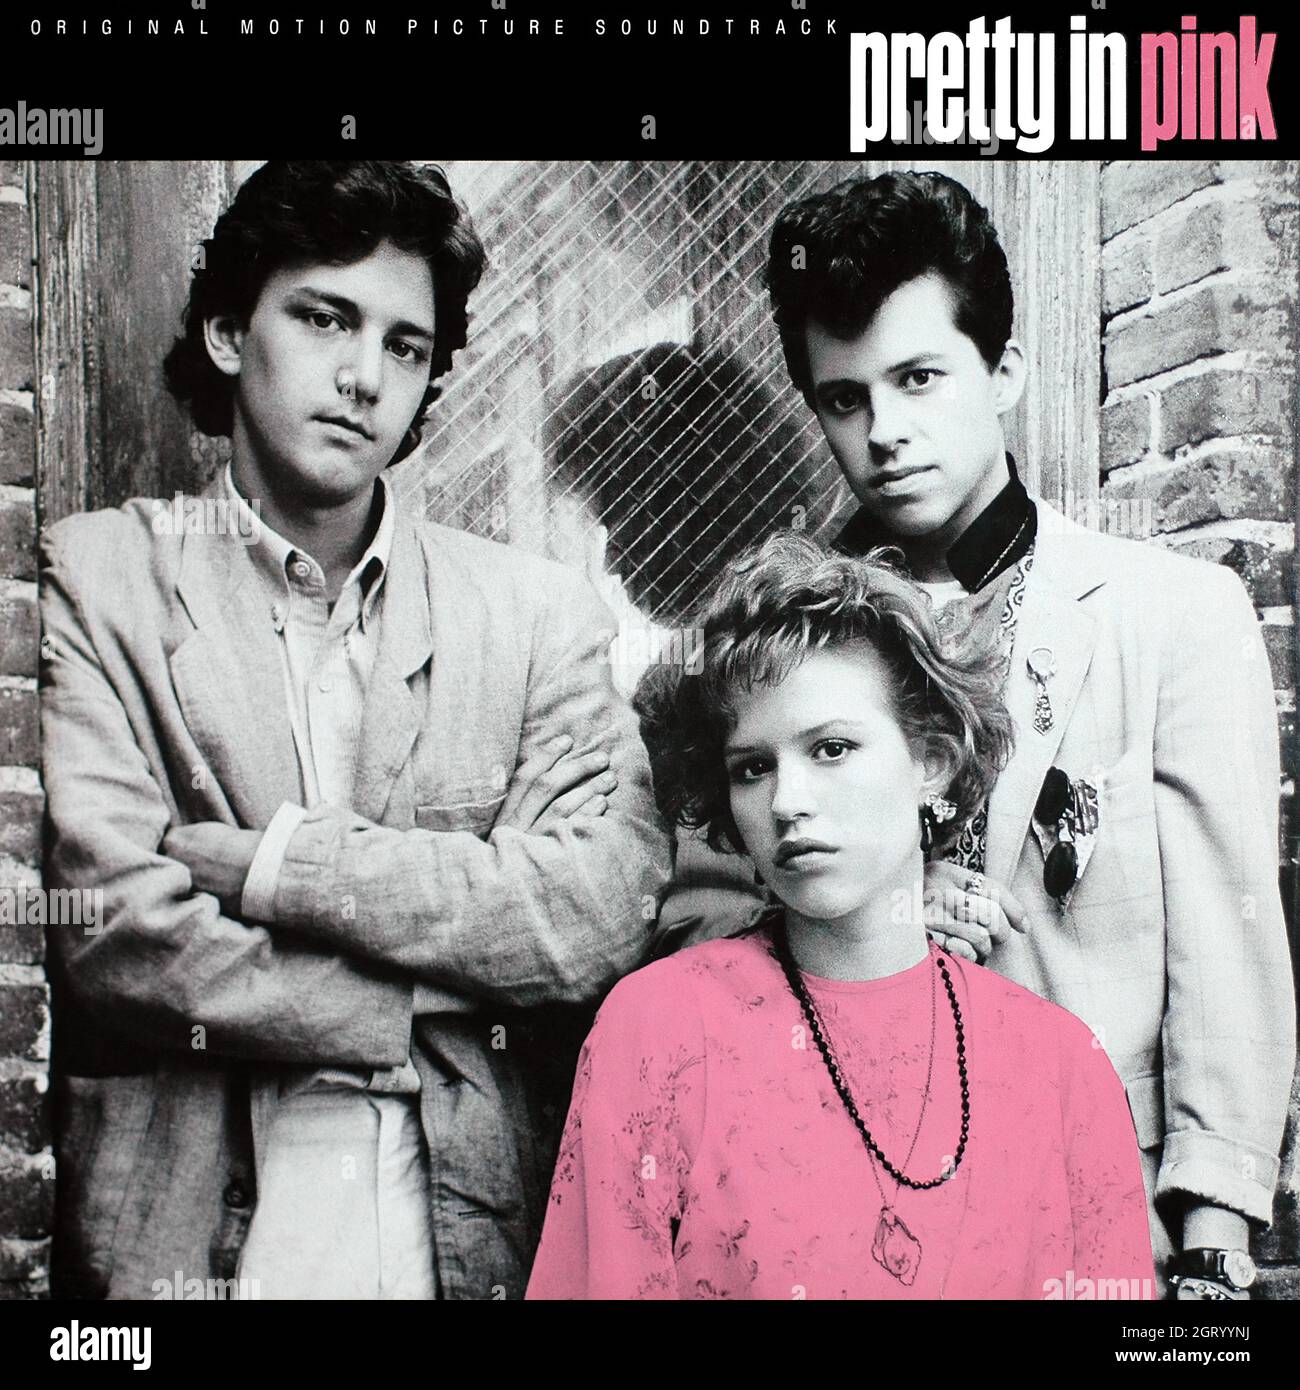 Pretty In Pink - Movie Soundtrack 1986  - Vintage Vinyl 33 rpm record Stock Photo